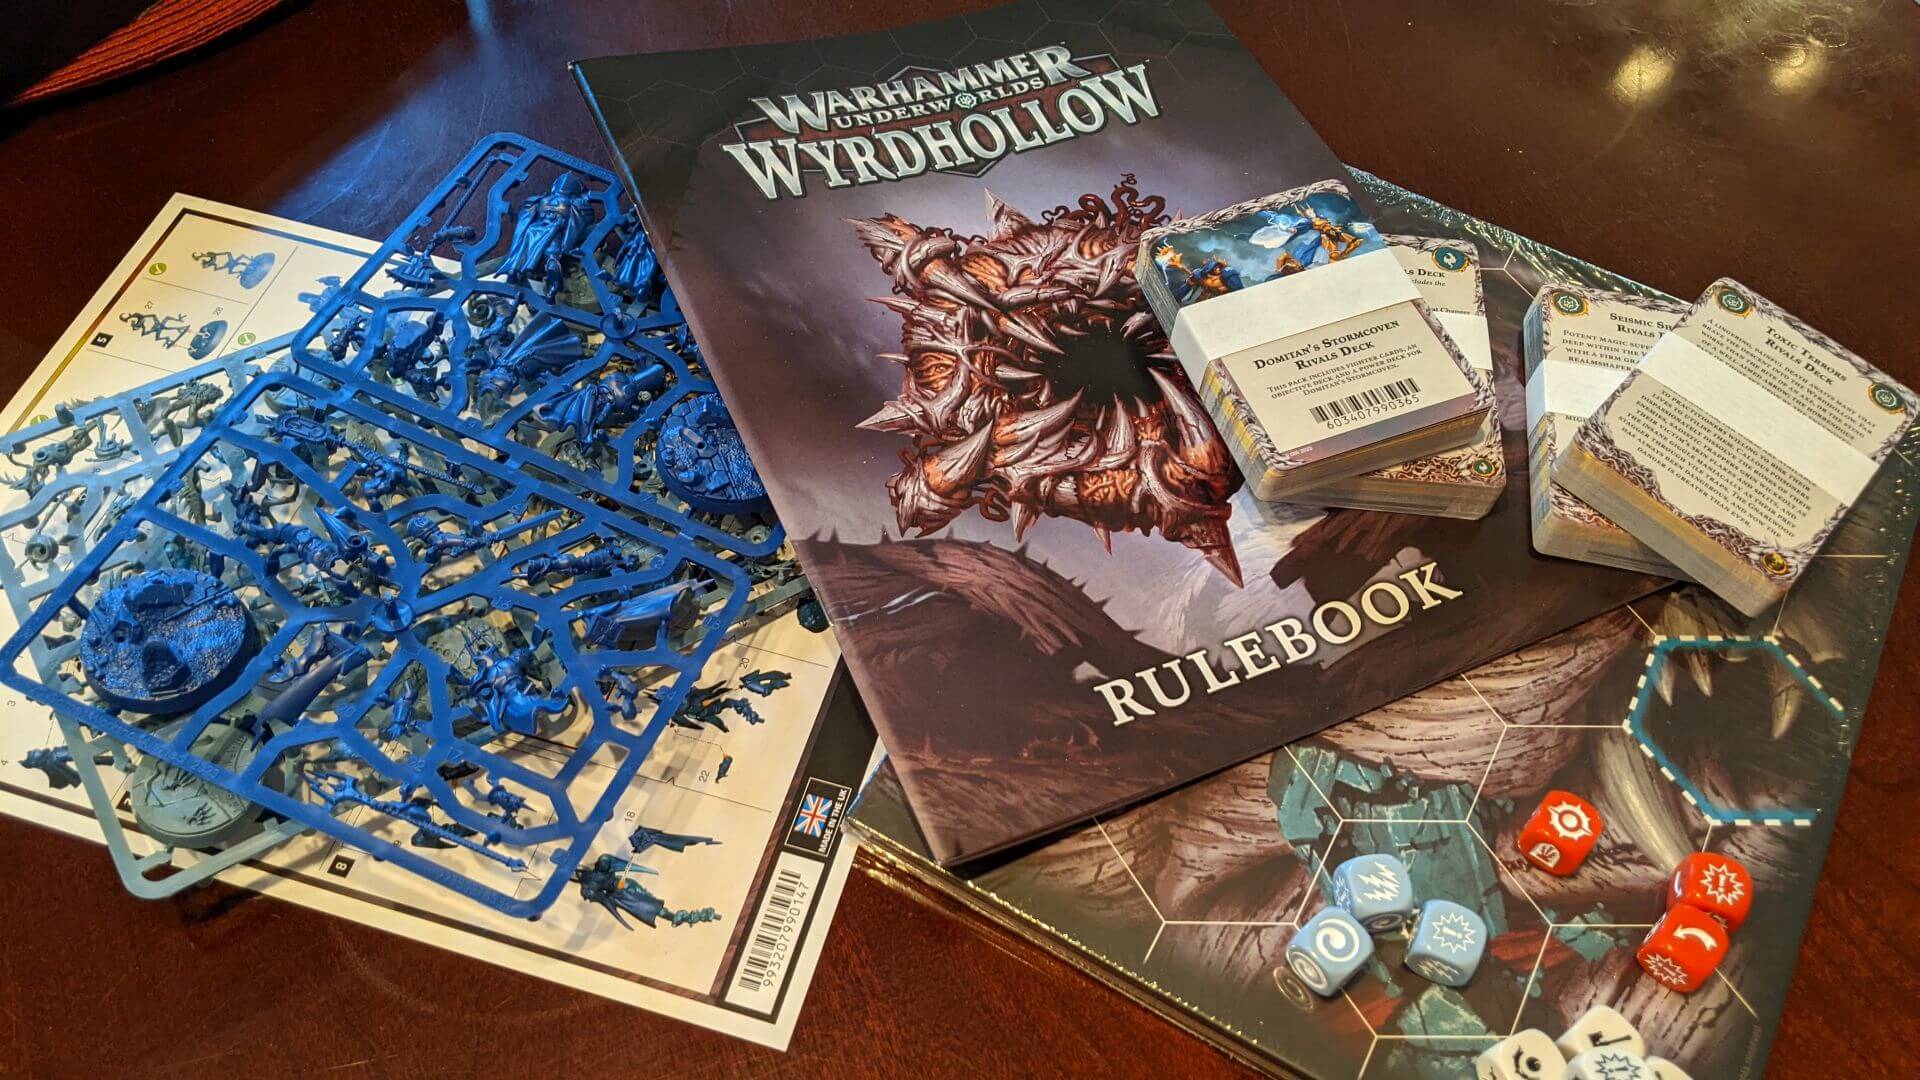 The unopened contents of the Warhammer Underworlds Wyrdhollow box